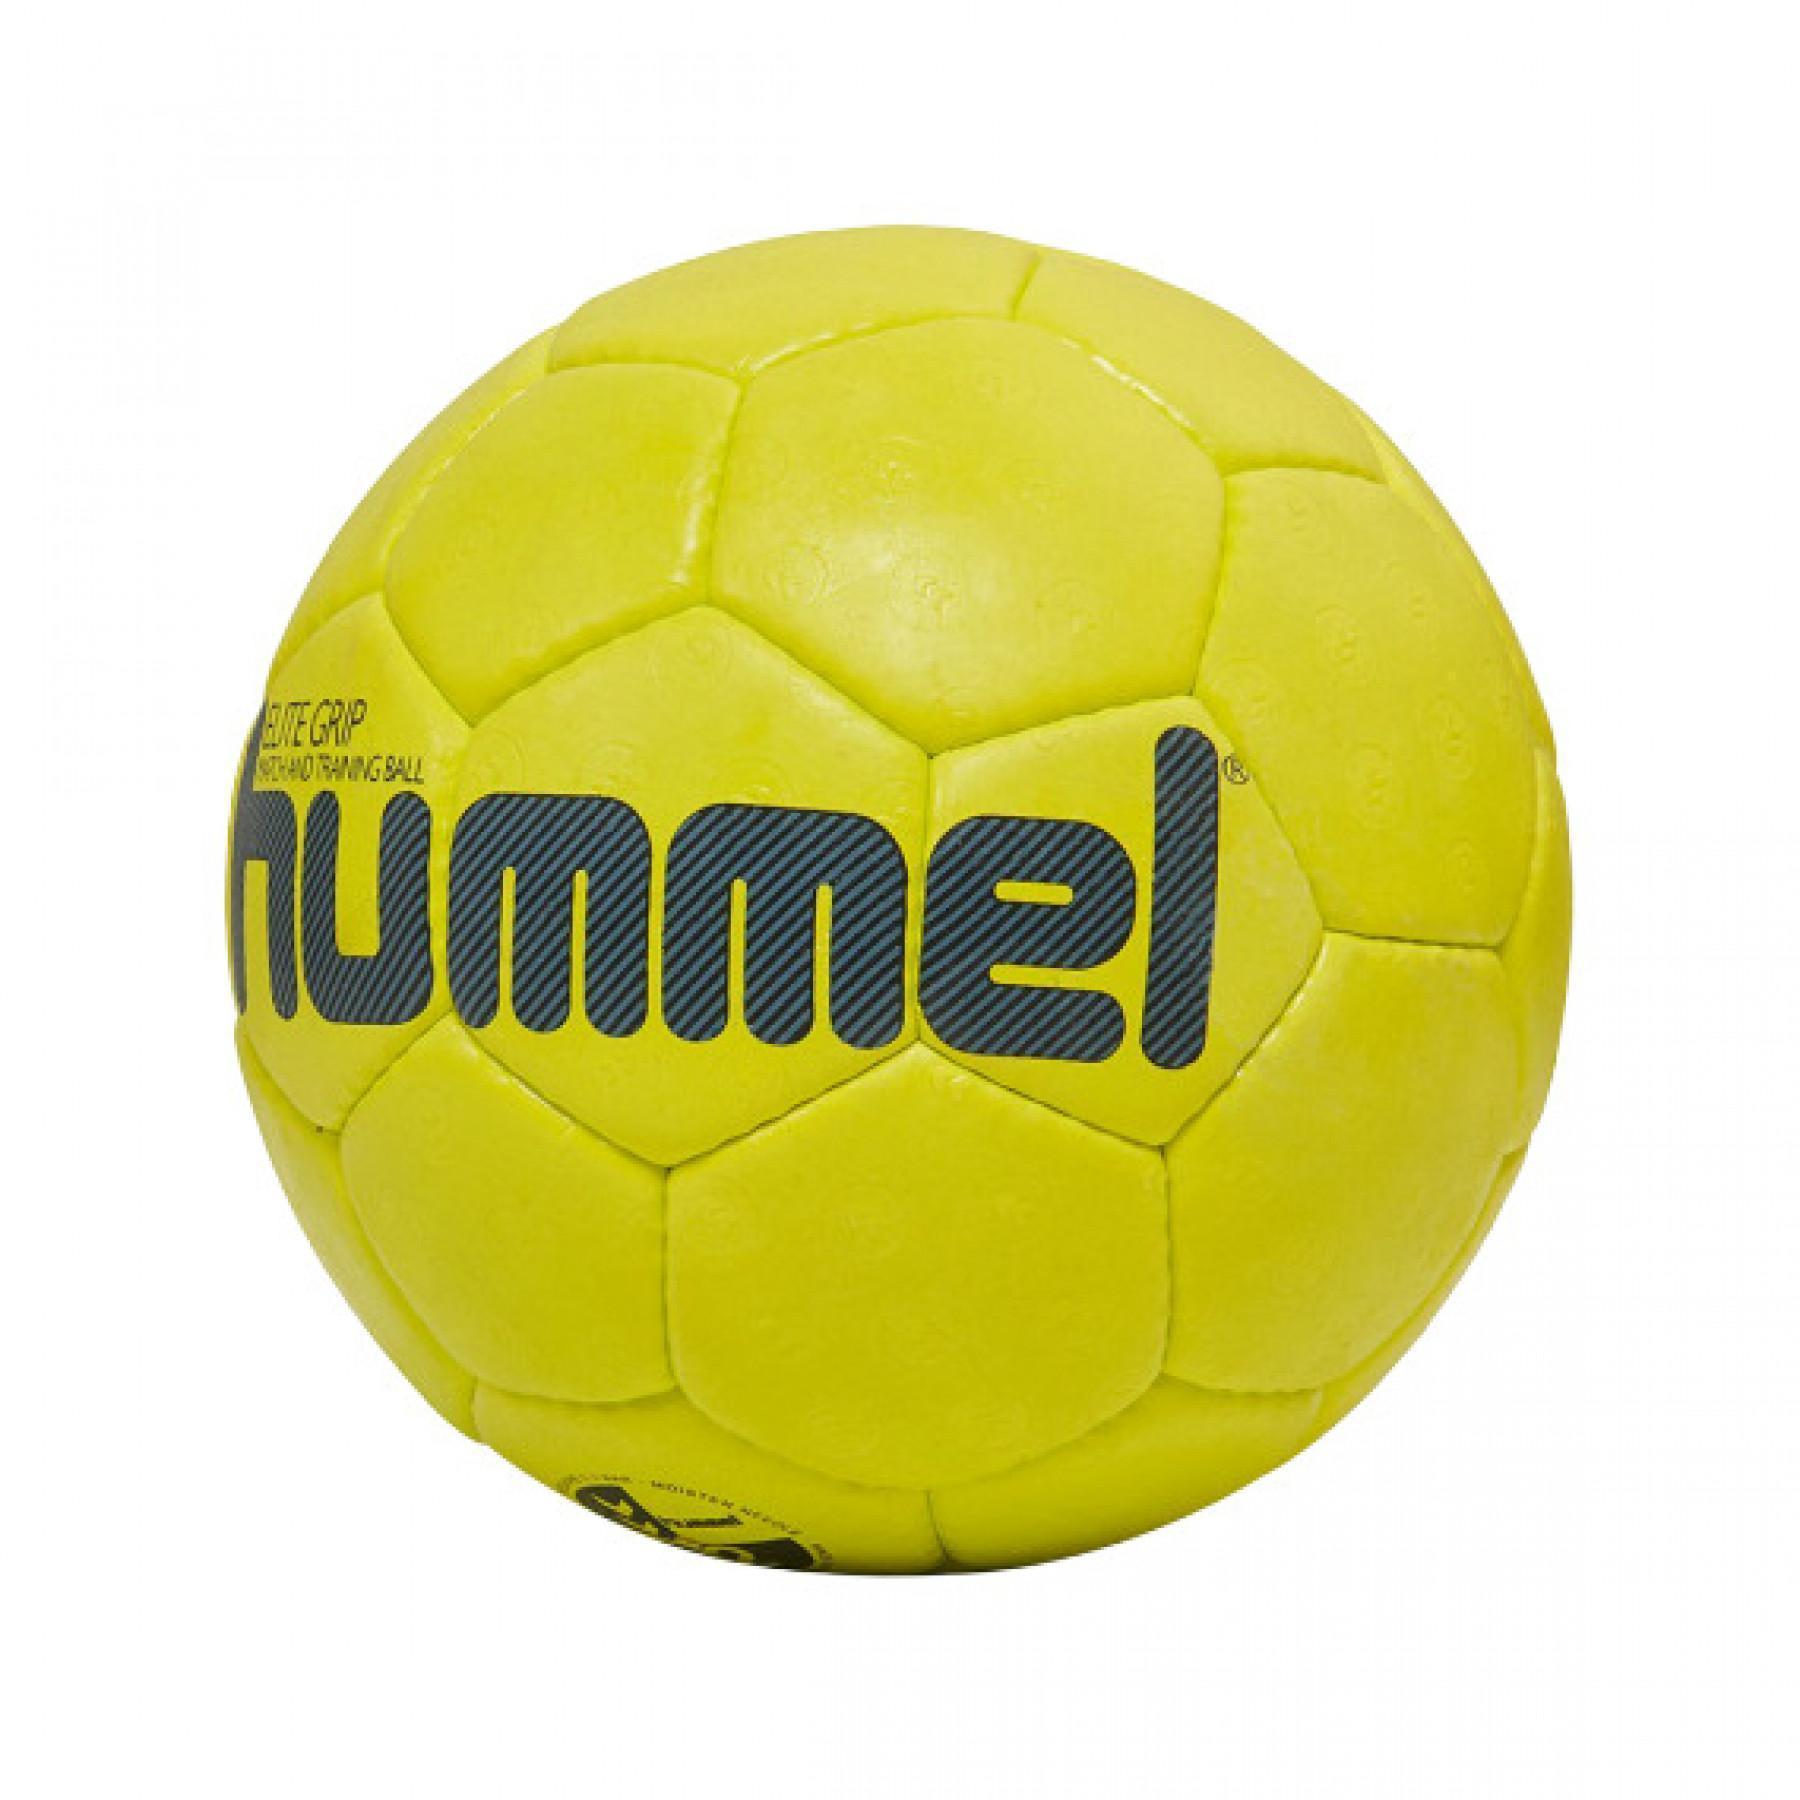 Ballon Hummel Elite grip